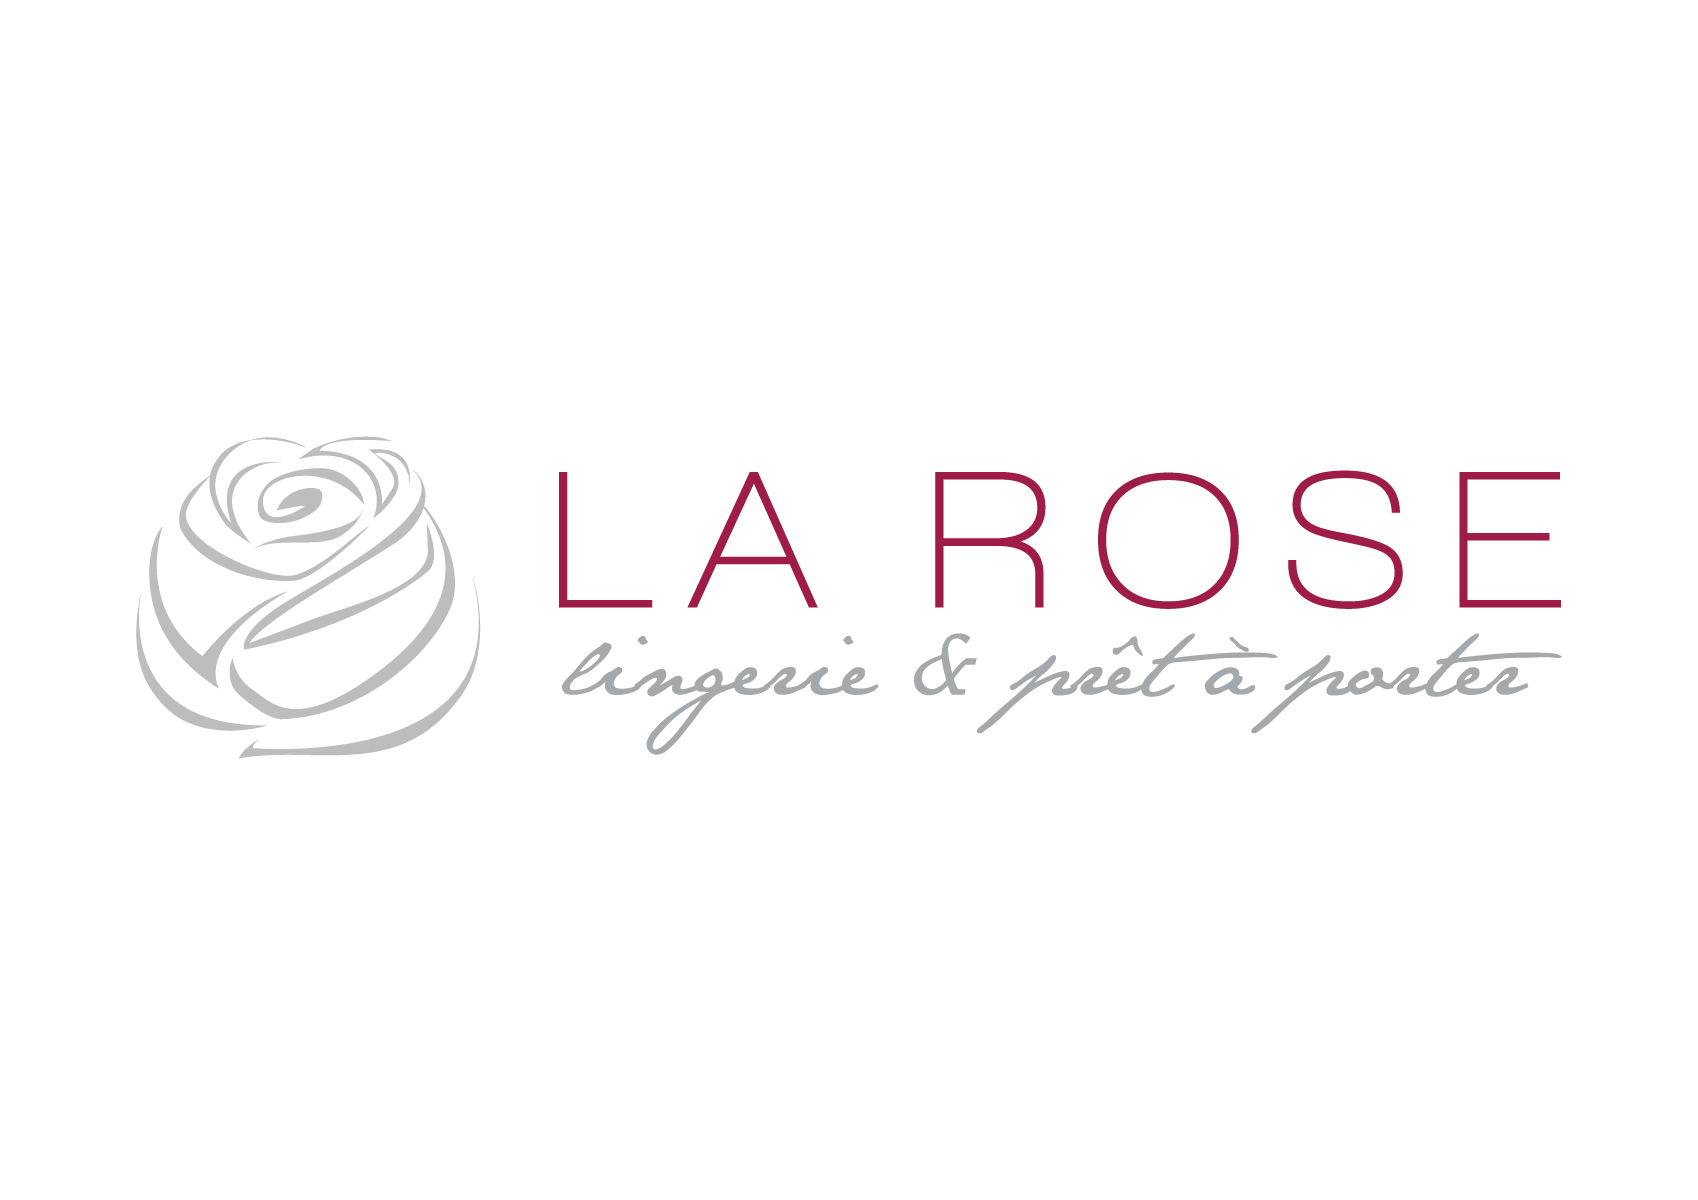 The Rose Logo - Designs By San Art Design For Online Store Fashion: LA ROSE